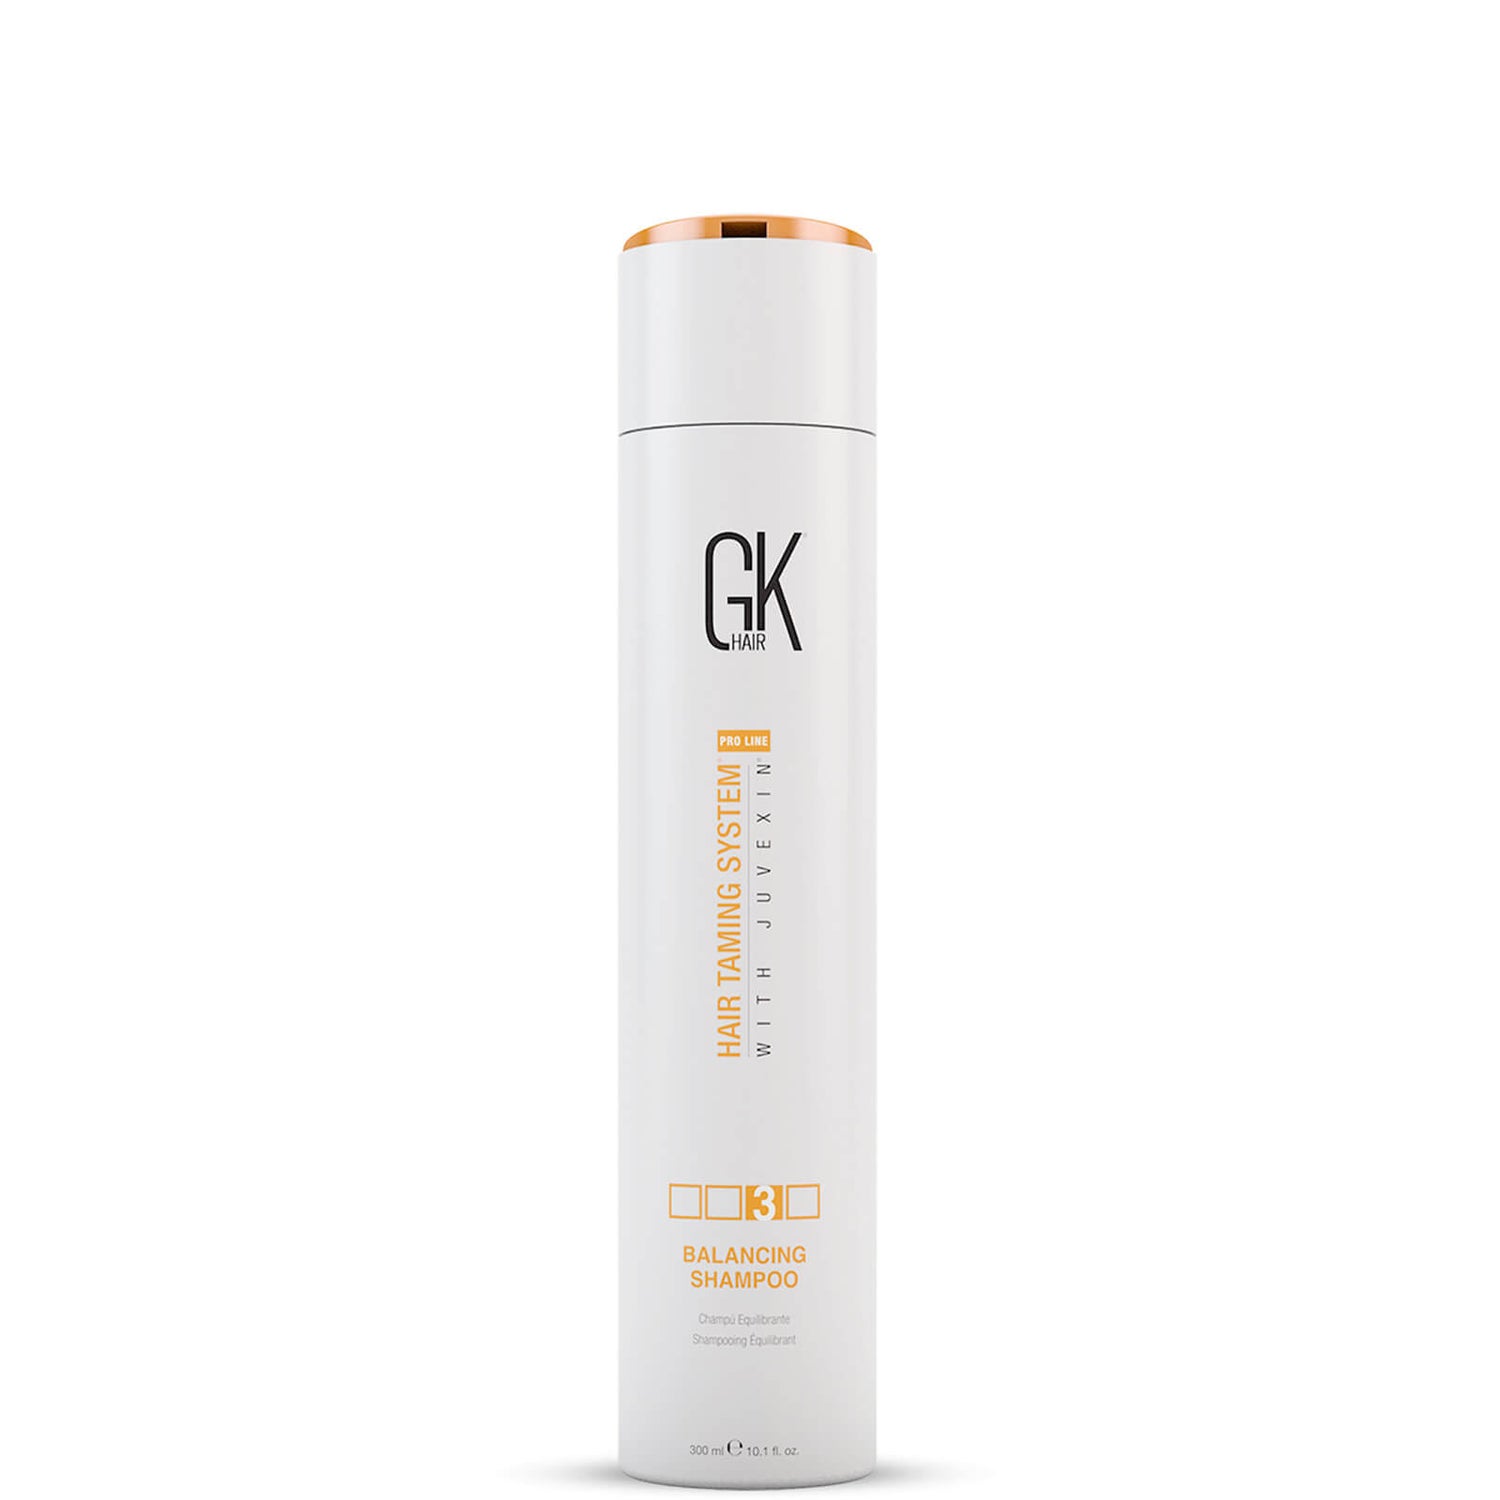 GKhair Balancing Shampoo 300ml